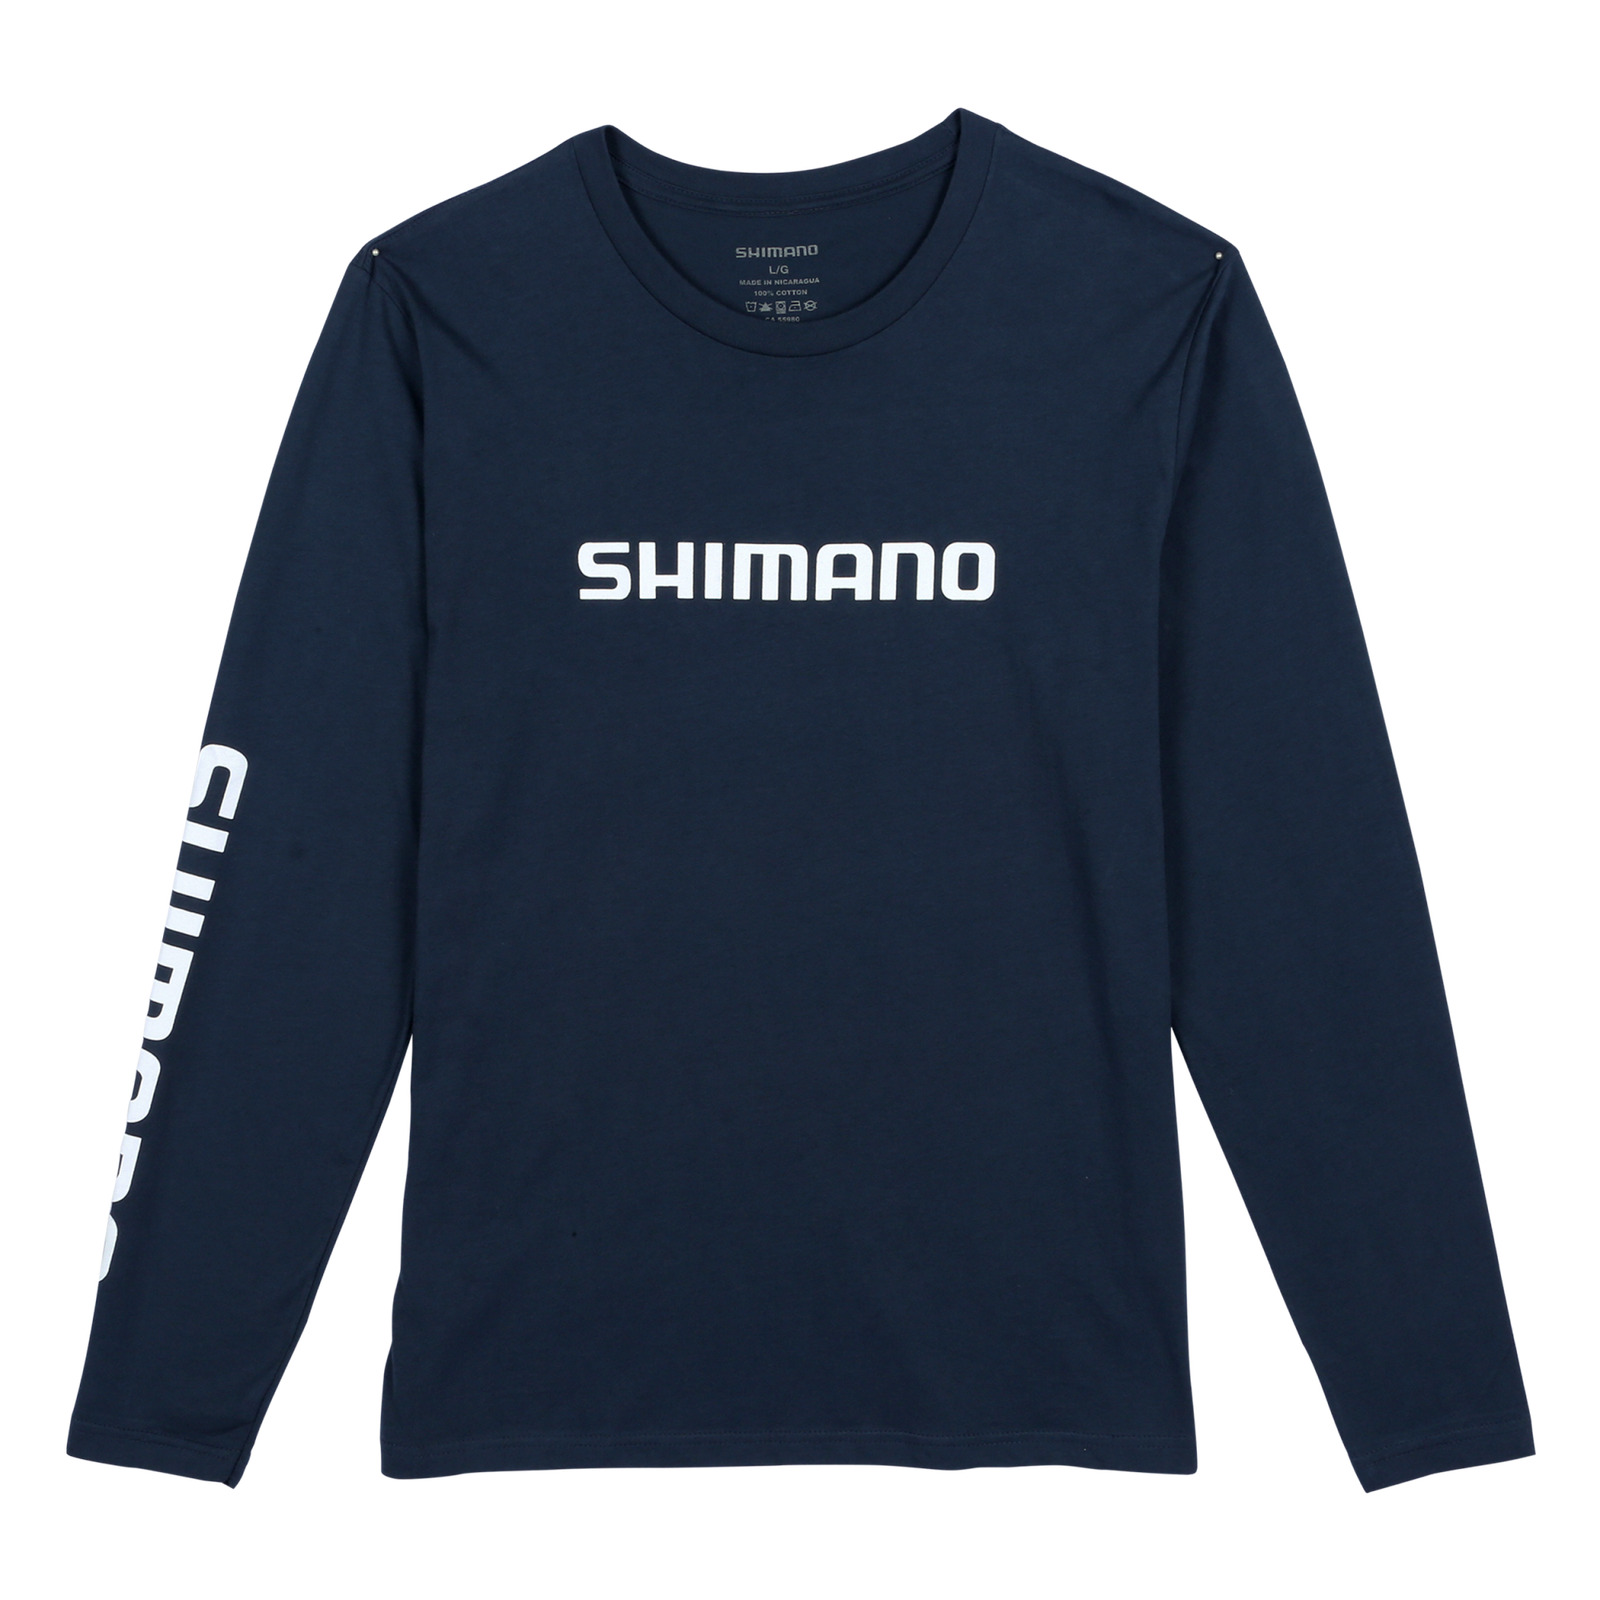 Shimano Long Sleeve Cotton Tee Color - Navy Size - SM (ATEERSLSSNV) Fishing